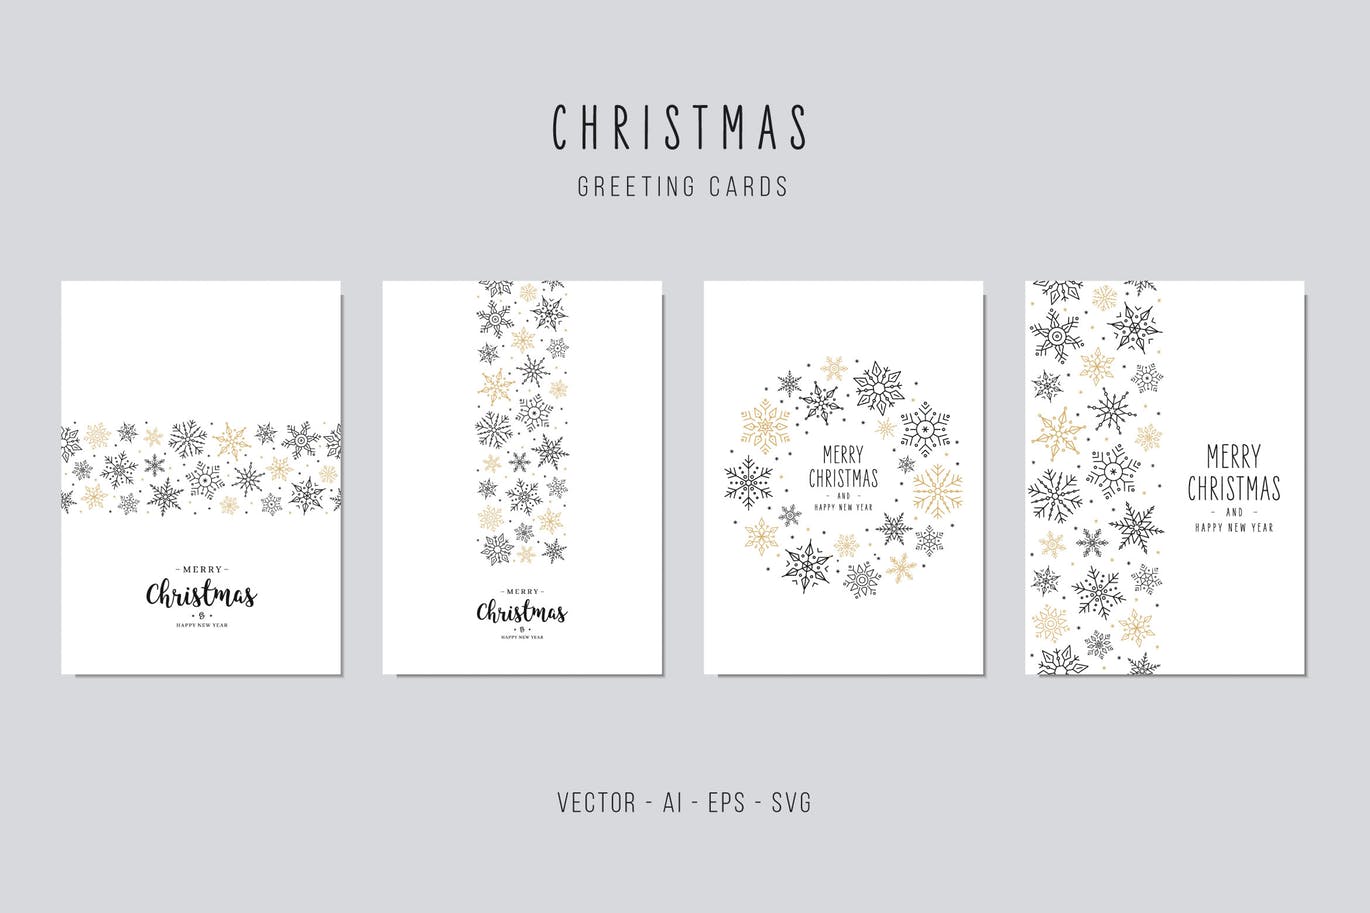 创意雪花手绘圣诞节贺卡矢量设计模板集v4 Christmas Greeting Vector Card Set插图